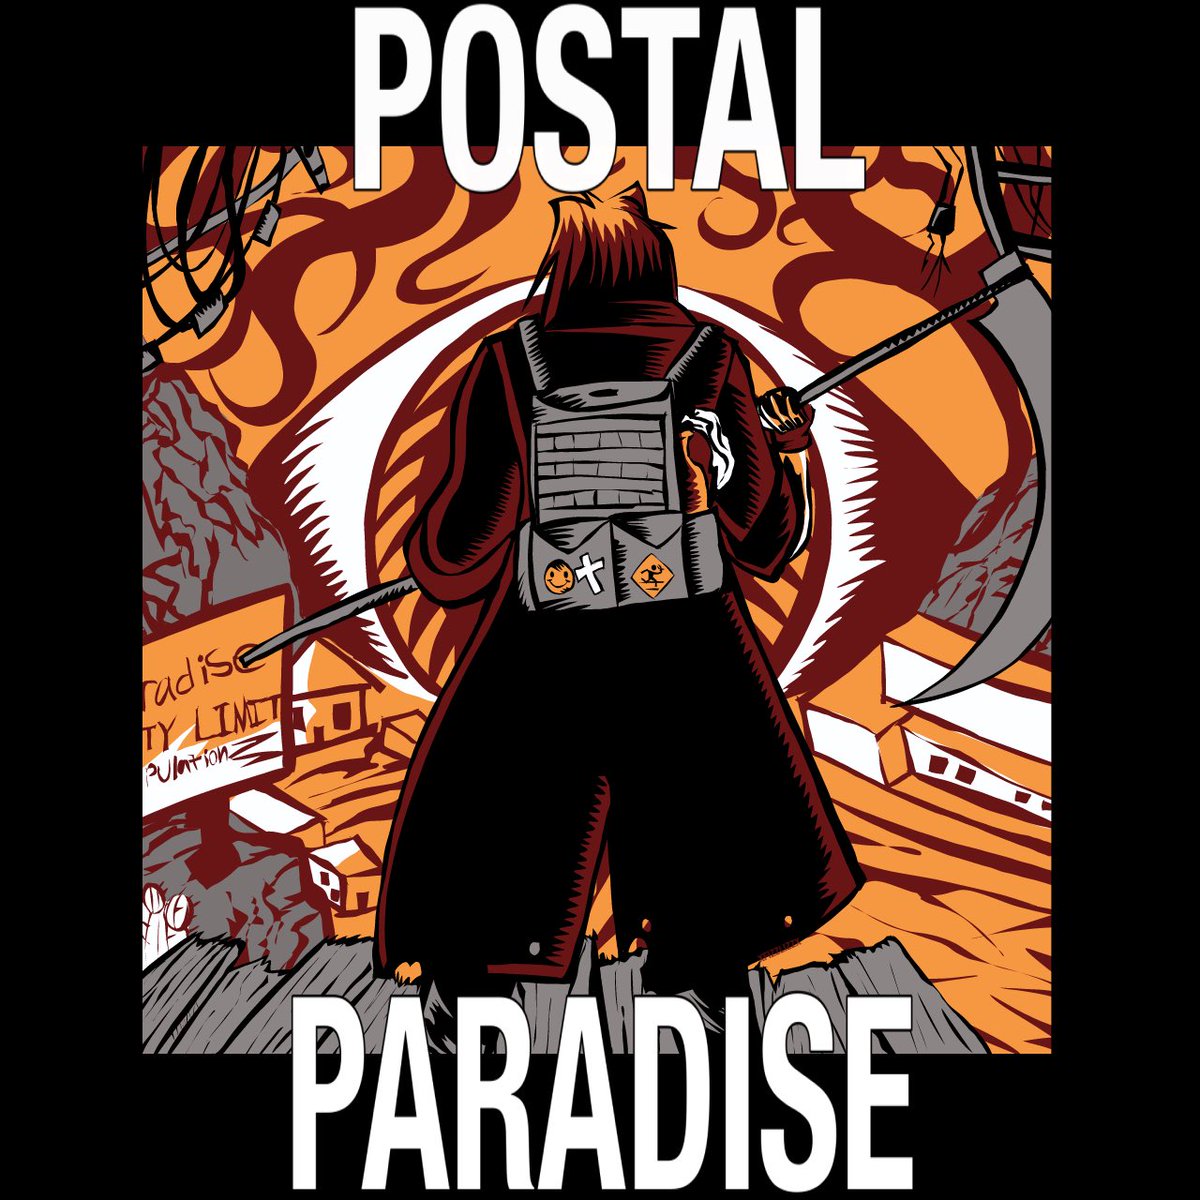 X A PARADISE LOST X
-
-
-
-
-
-
-
#postal1997 #postal #postal1 #postalredux #postaldude #albumcover #albumcoverredraw #kmfdm